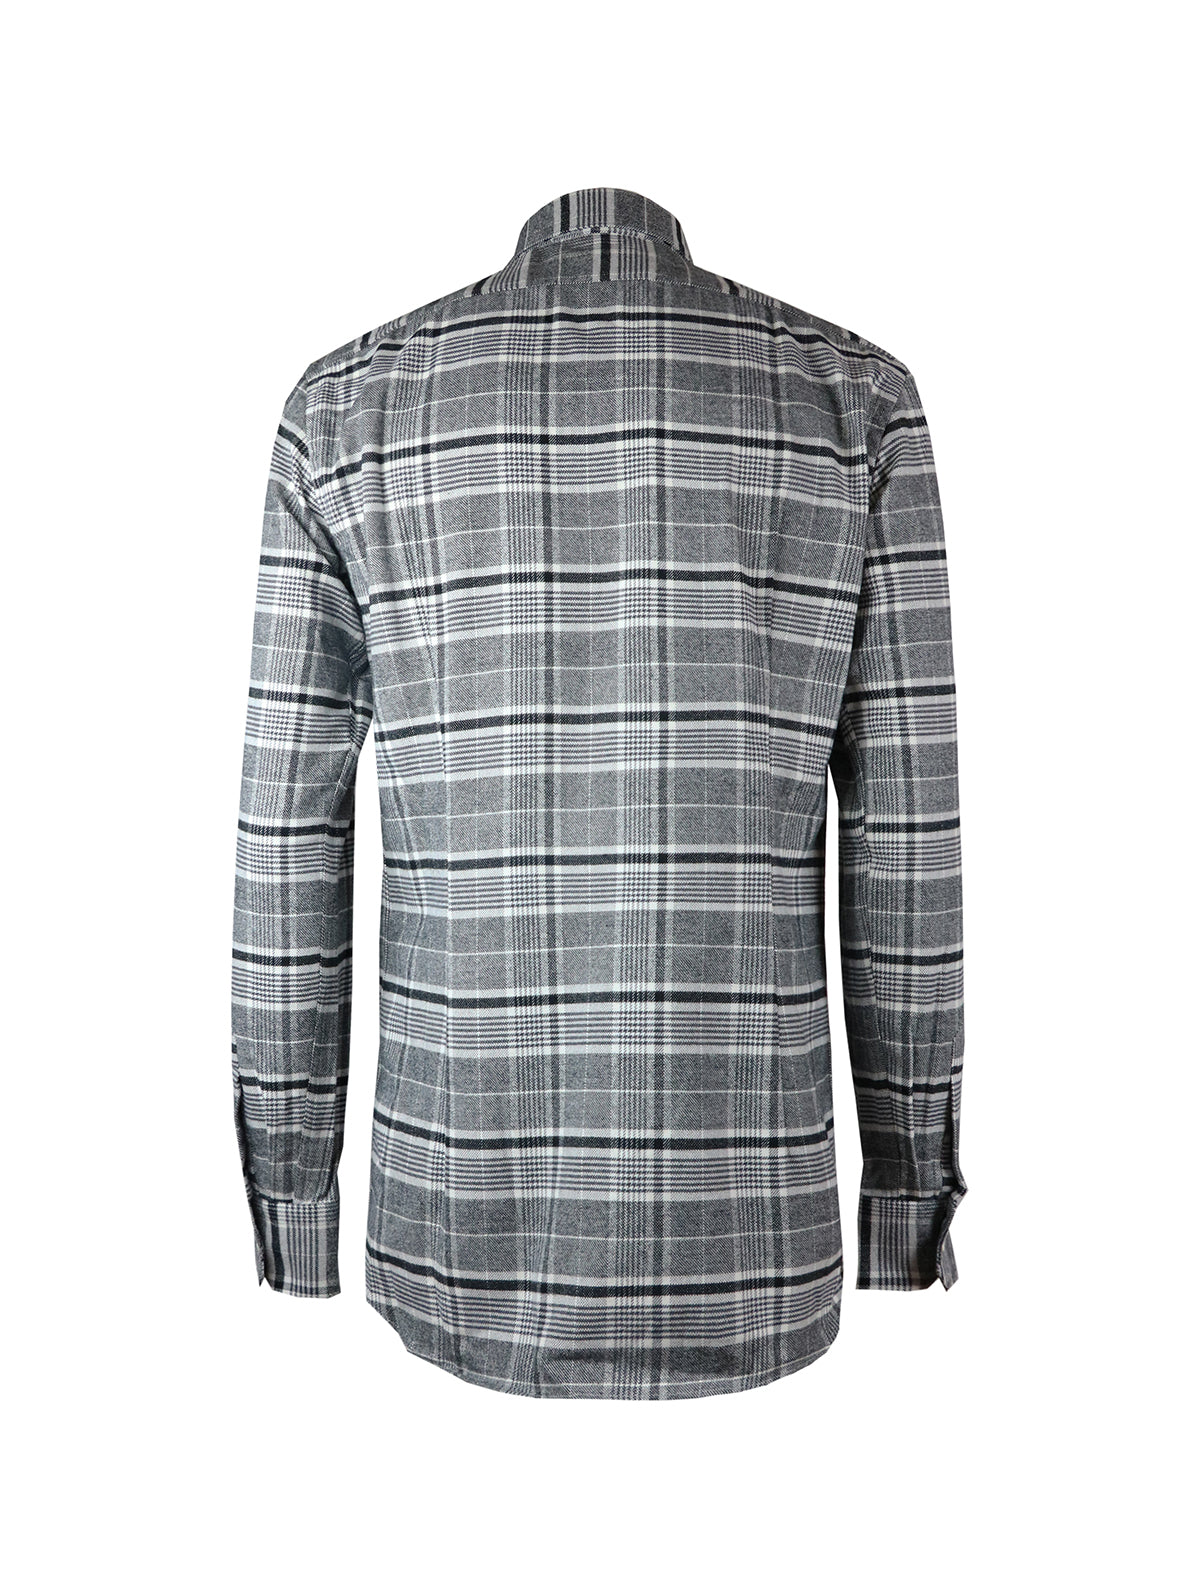 Gabriele Pasini Cotton Checked Shirt in Grey/Black